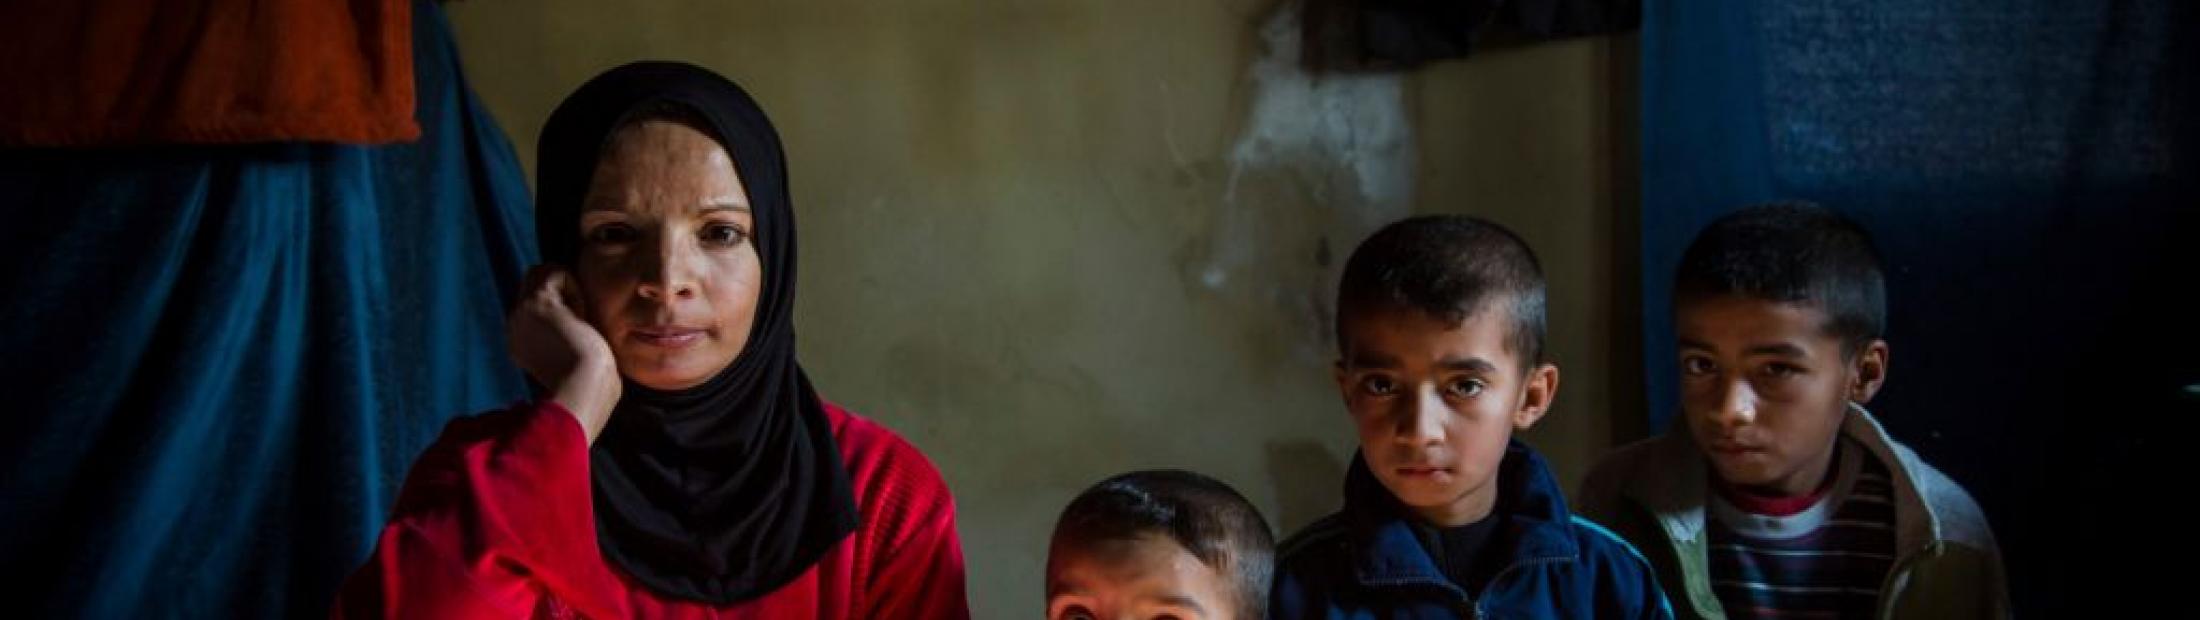 Las madres sirias luchan por sacar adelante a sus familias 